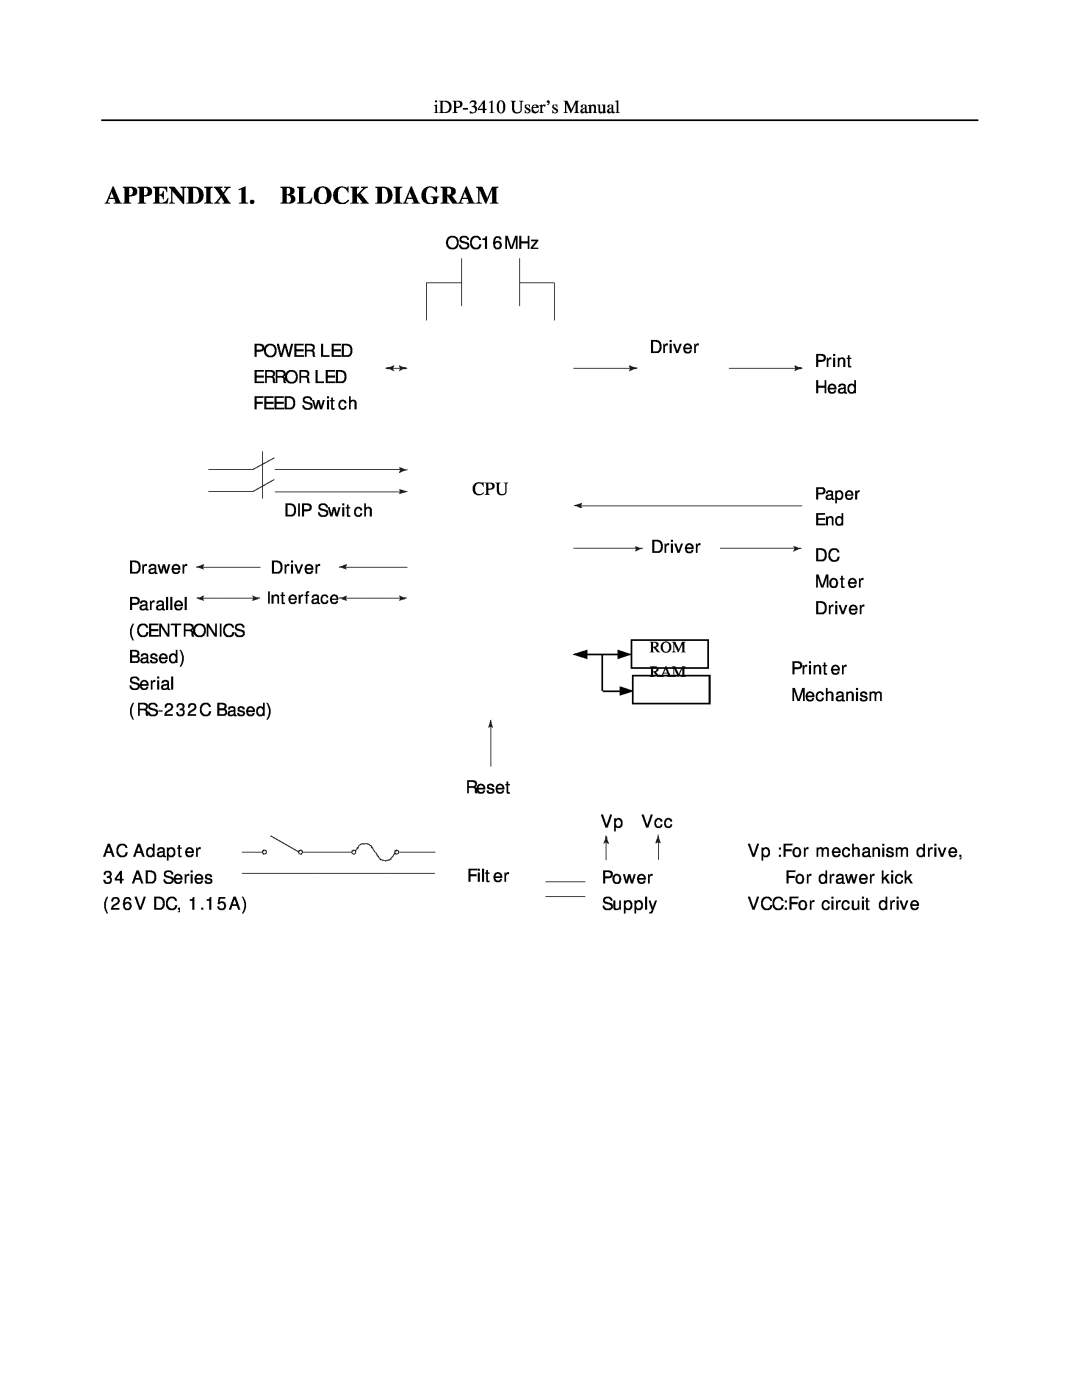 Addlogix iDP-3410 user manual APPENDIX 1. BLOCK DIAGRAM, Rom Ram 